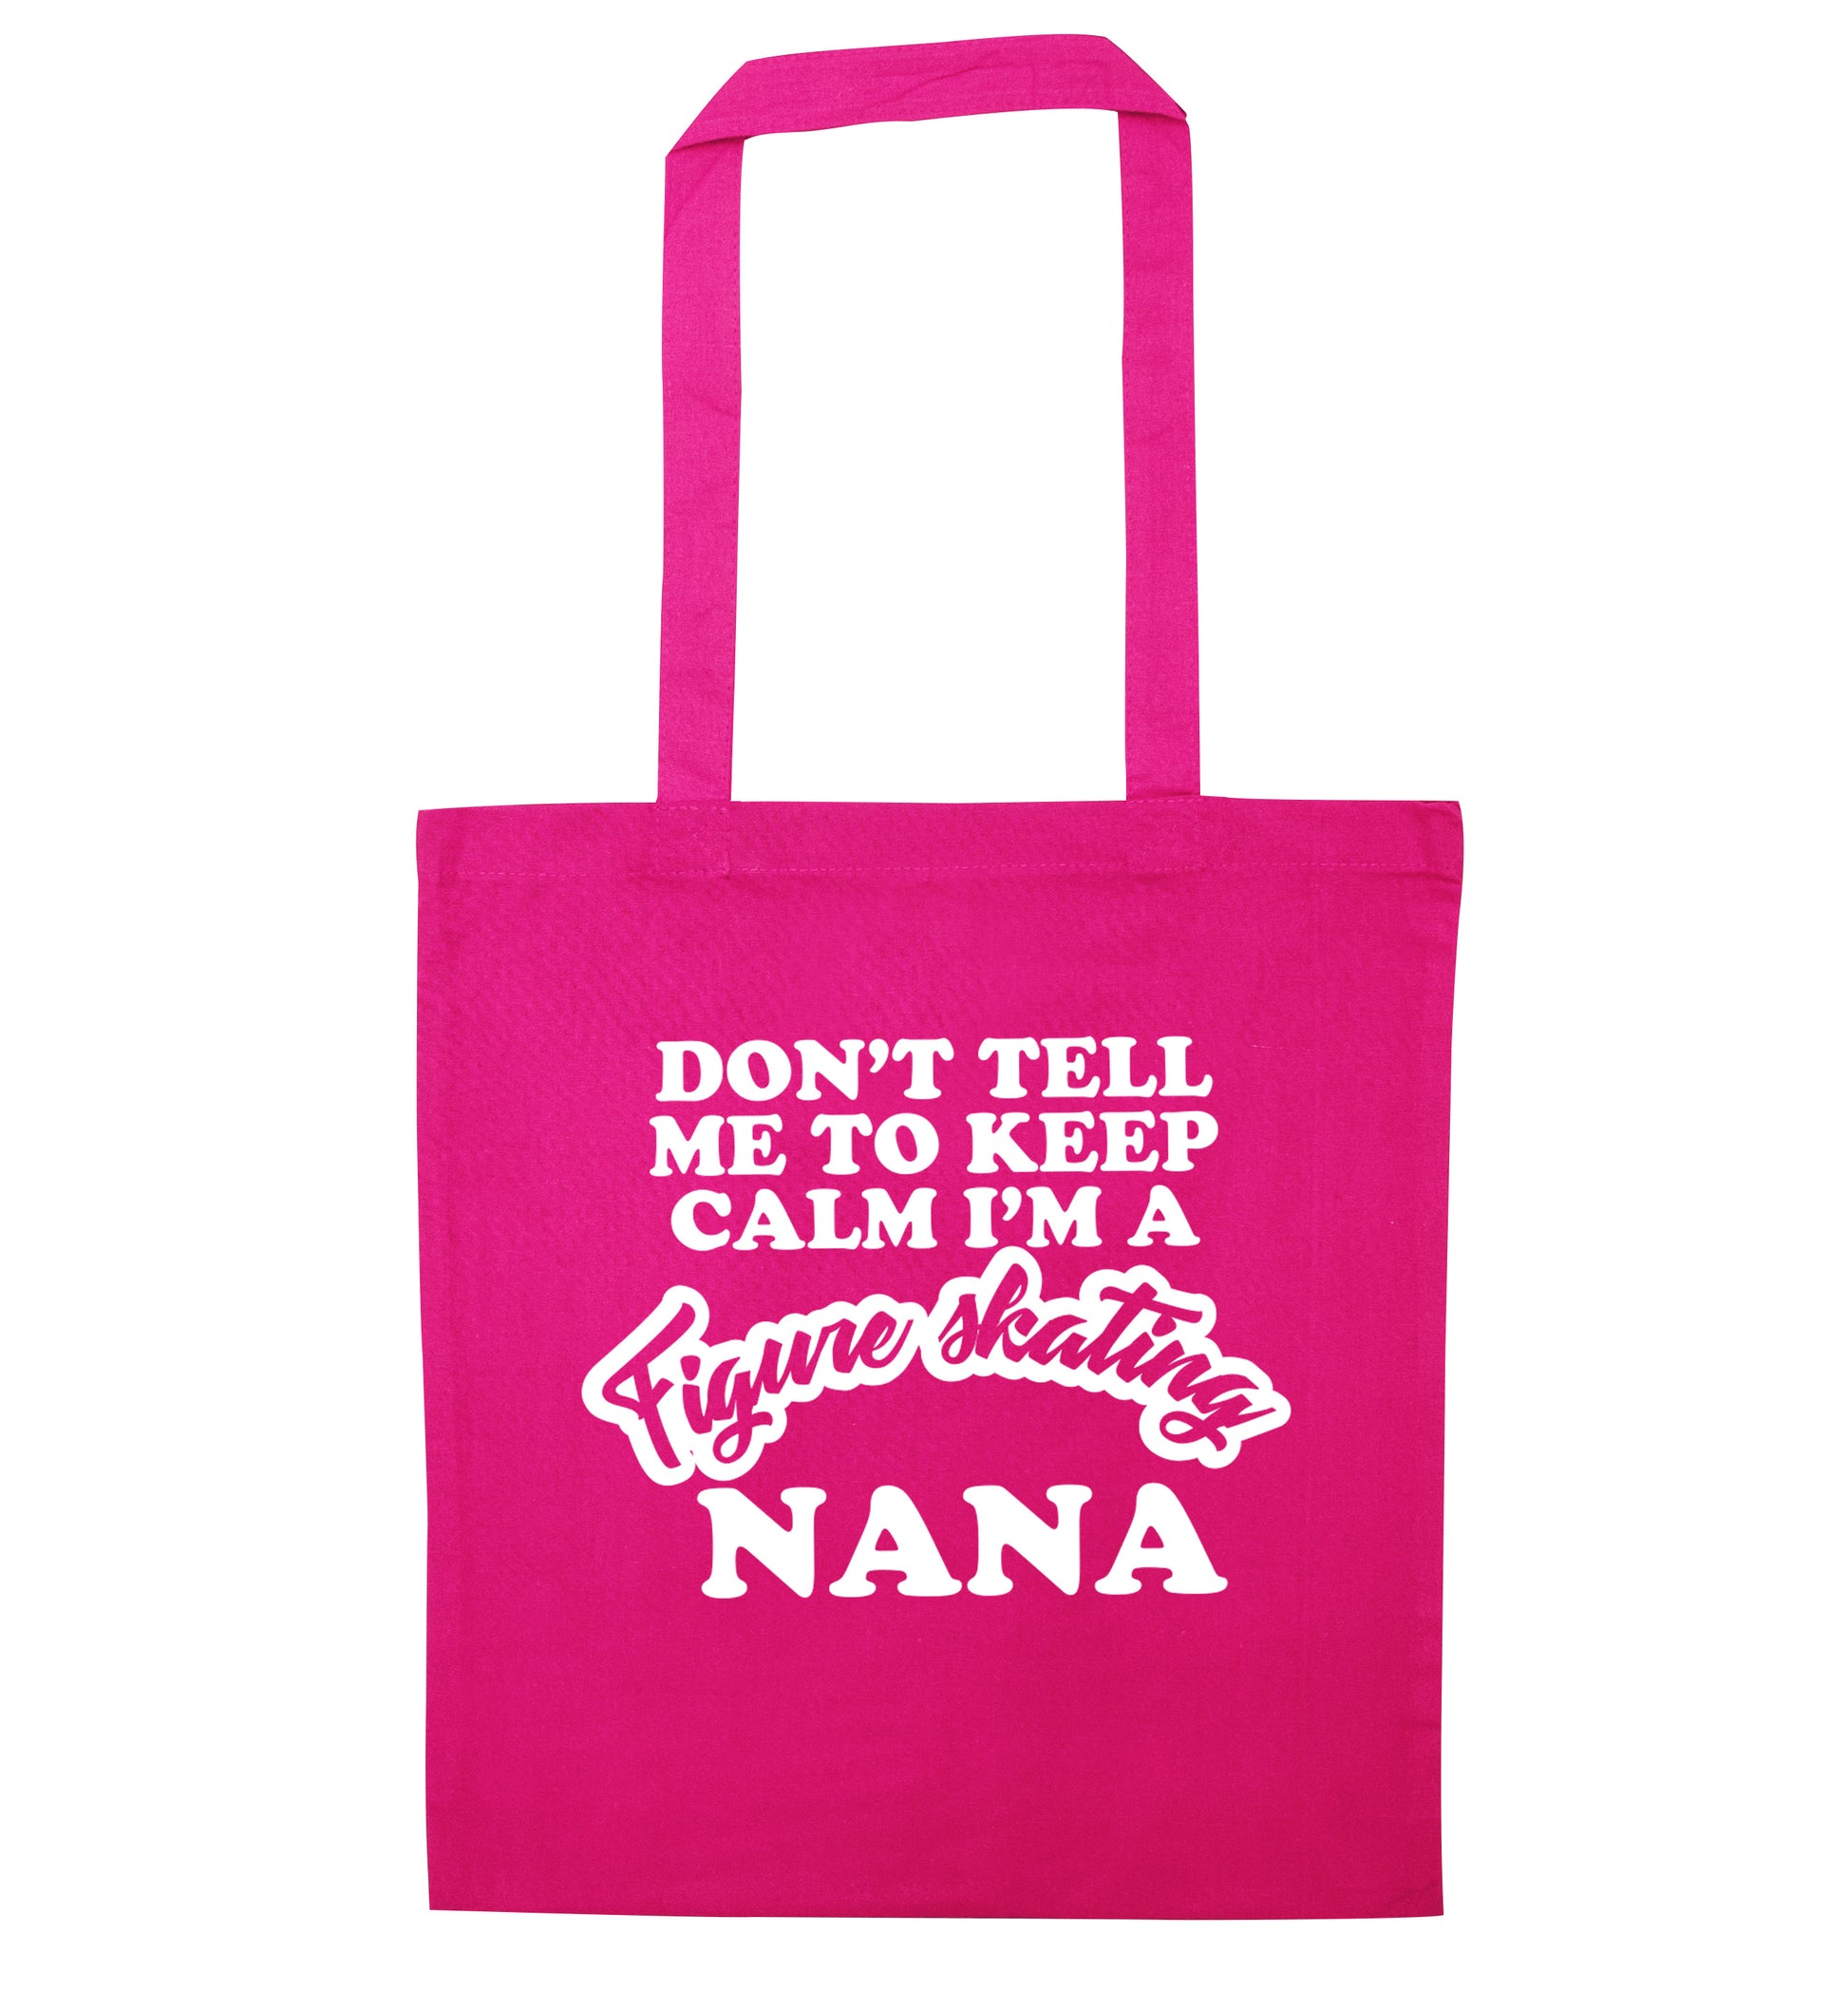 Don't tell me to keep calm I'm a figure skating nana pink tote bag